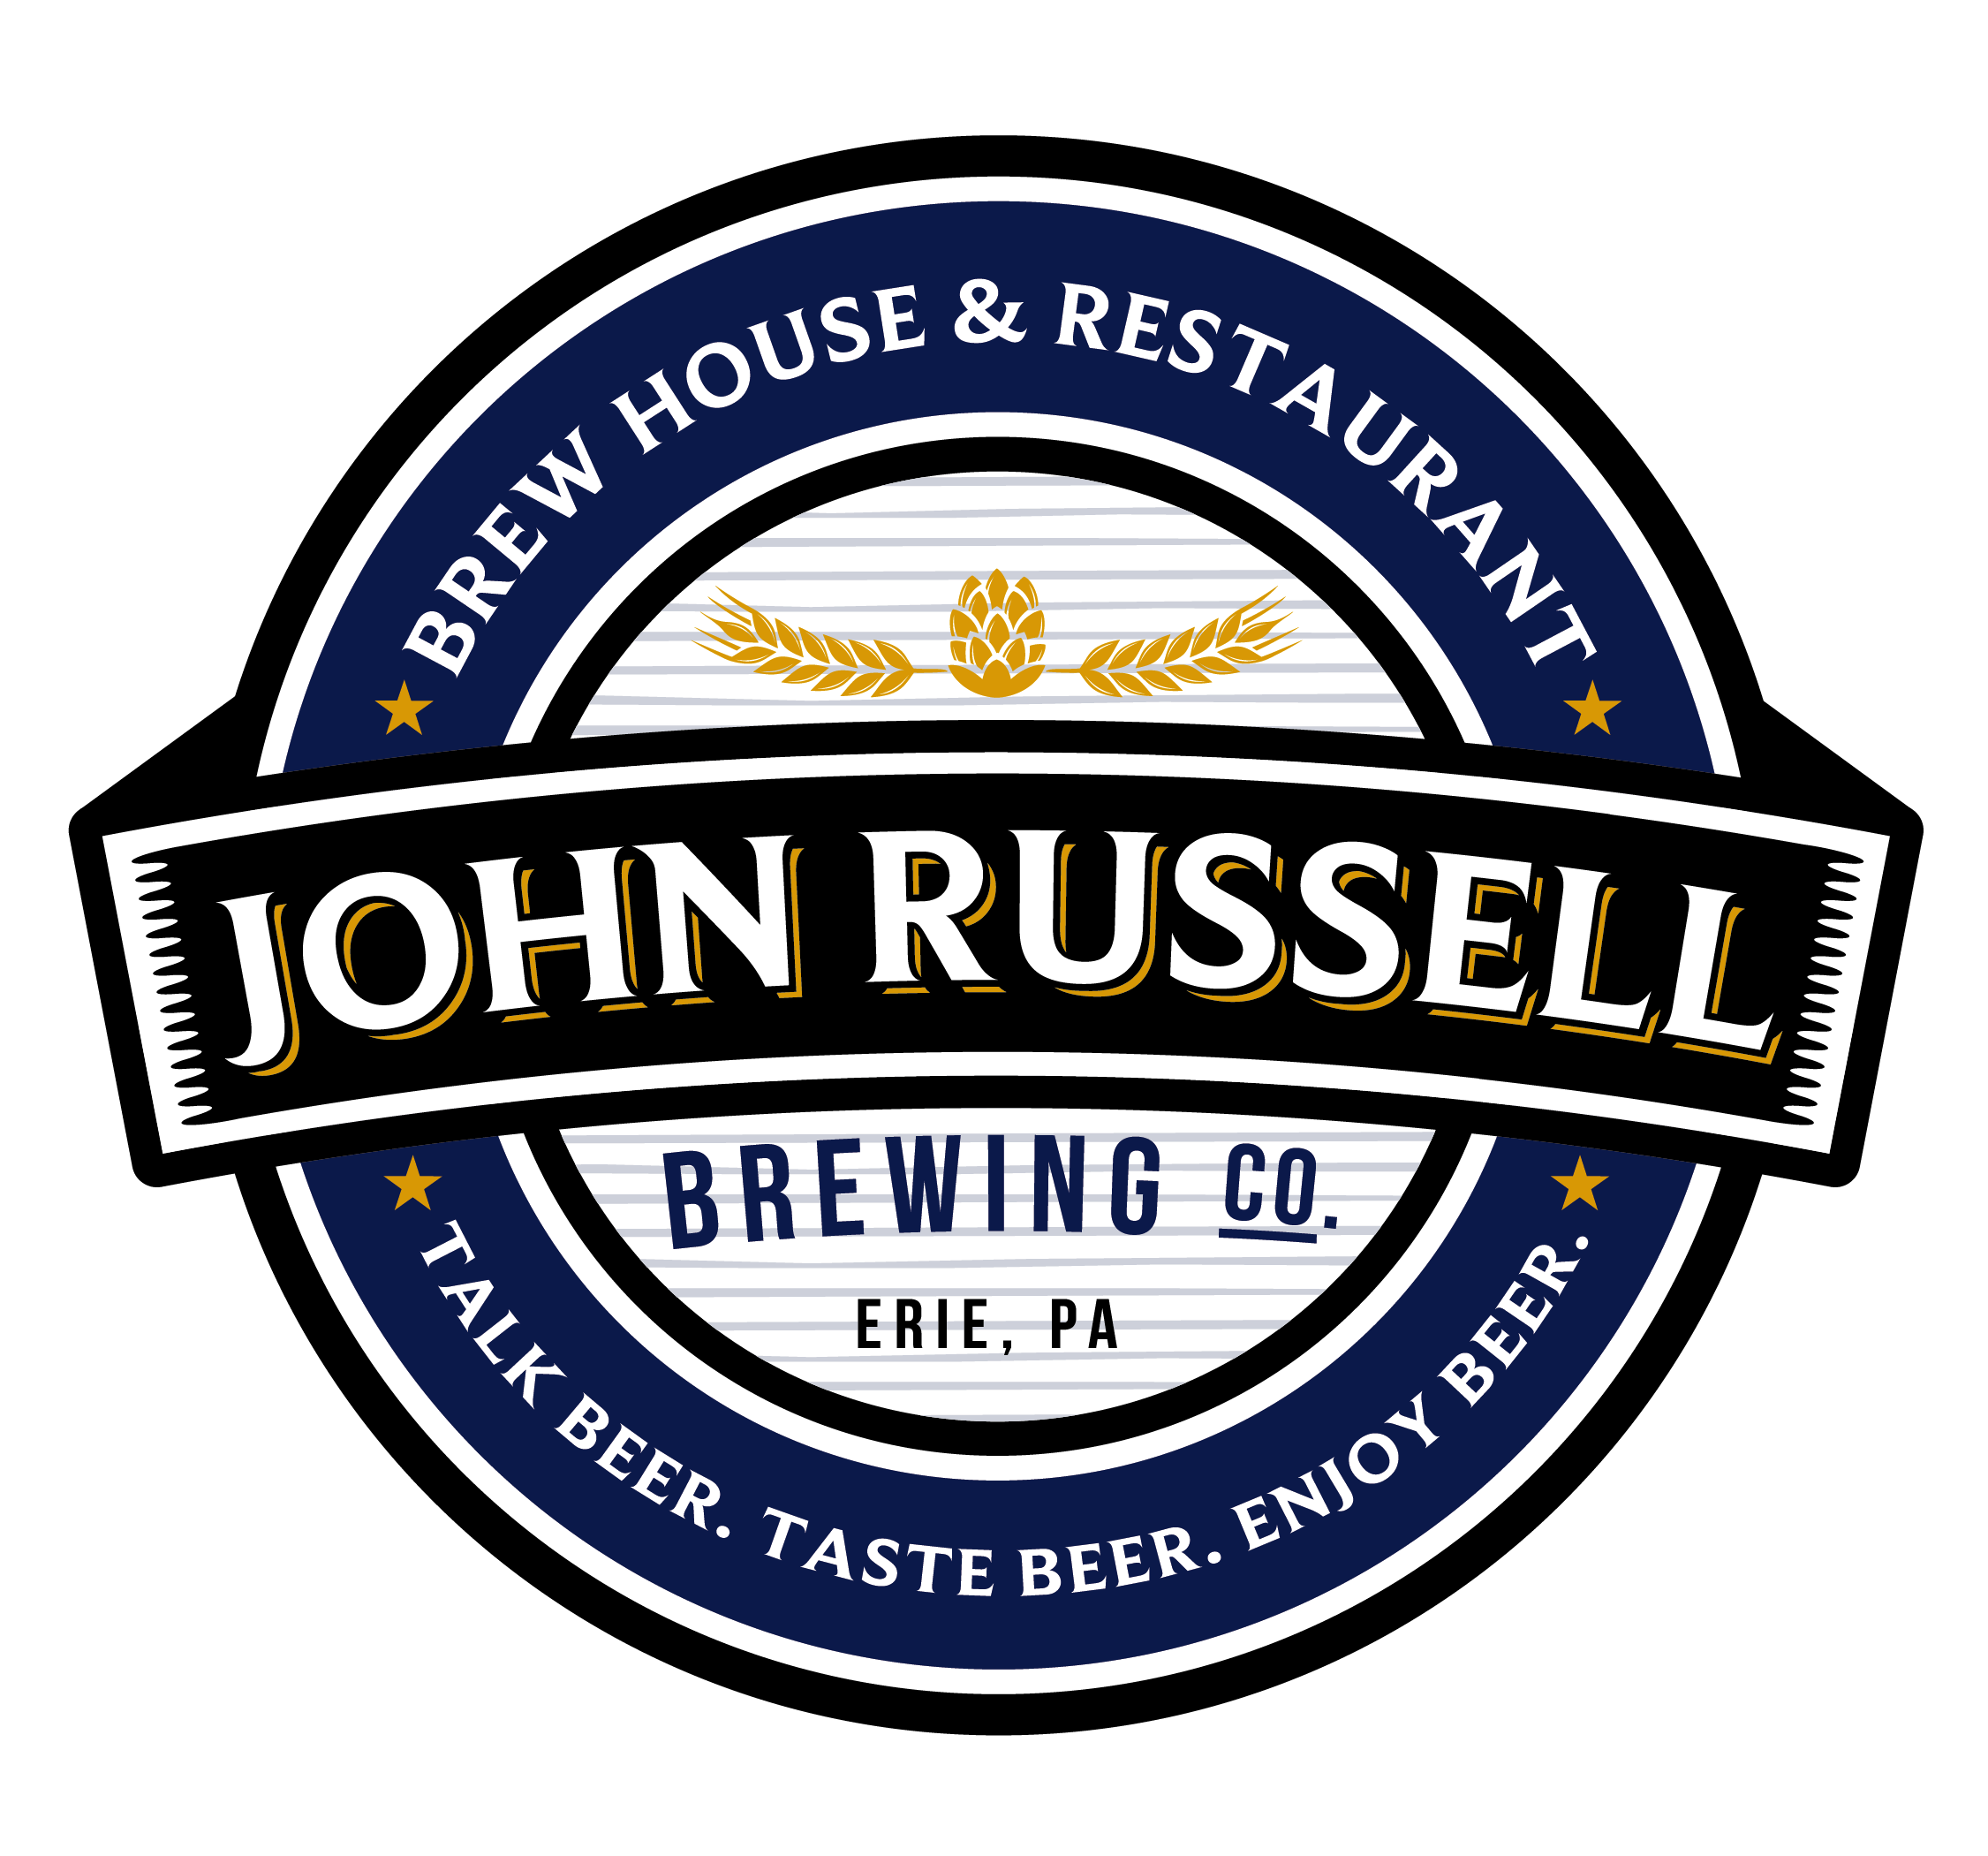 John Russell Brewing Co Brew House Restaurant logo final hr v2